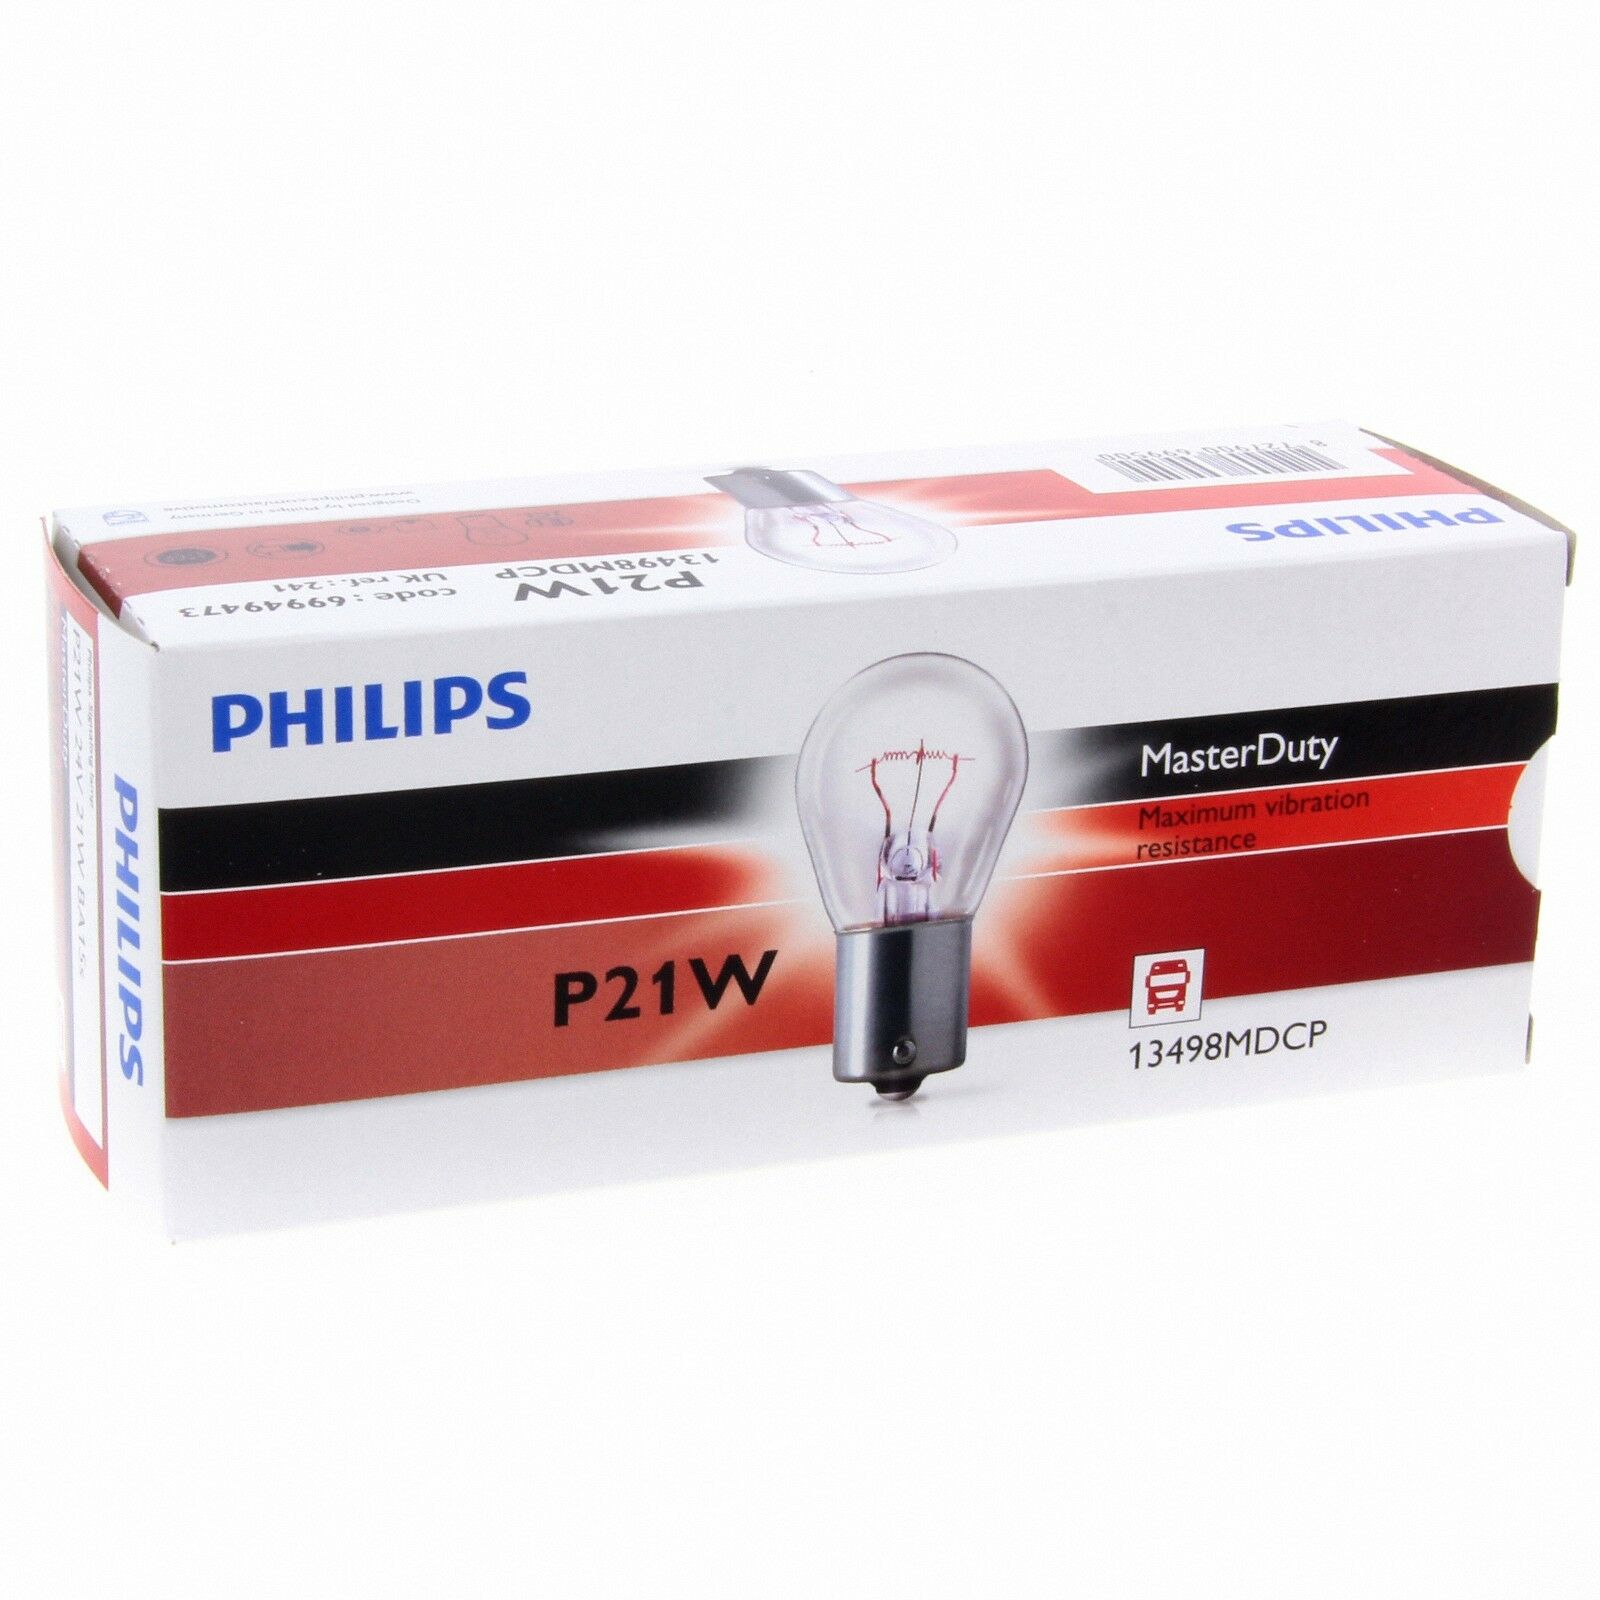 P21W Philips MasterDuty 2x Longlife LKW 24V Halogenlampe 13498MD 10er Box Pack